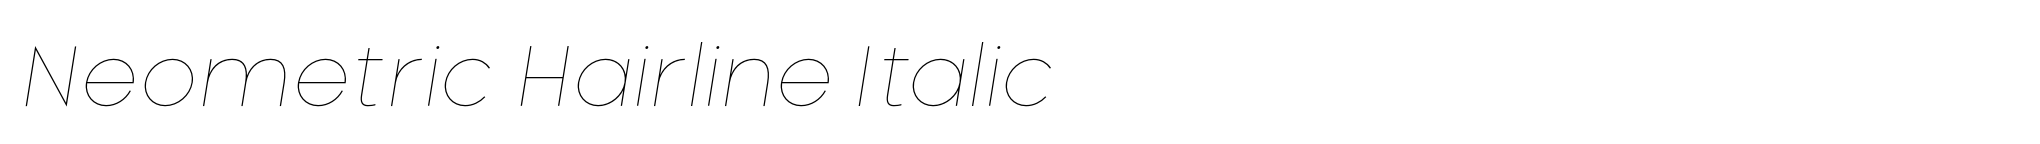 Neometric Hairline Italic image